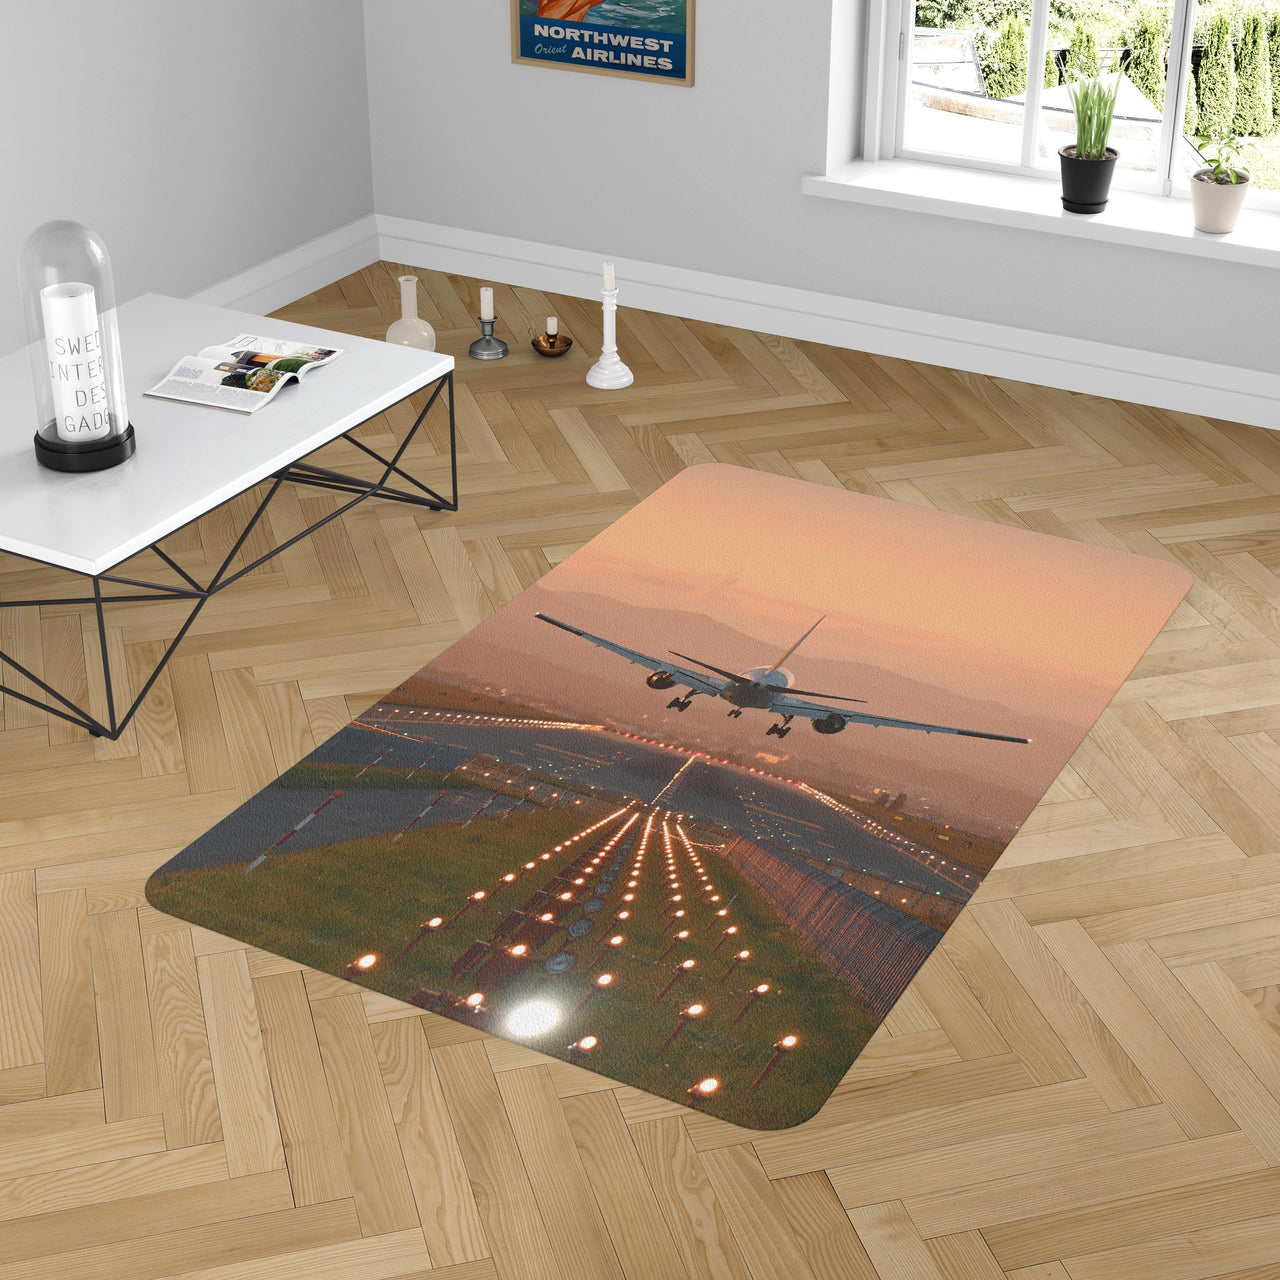 Super Cool Landing During Sunset Designed Carpet & Floor Mats